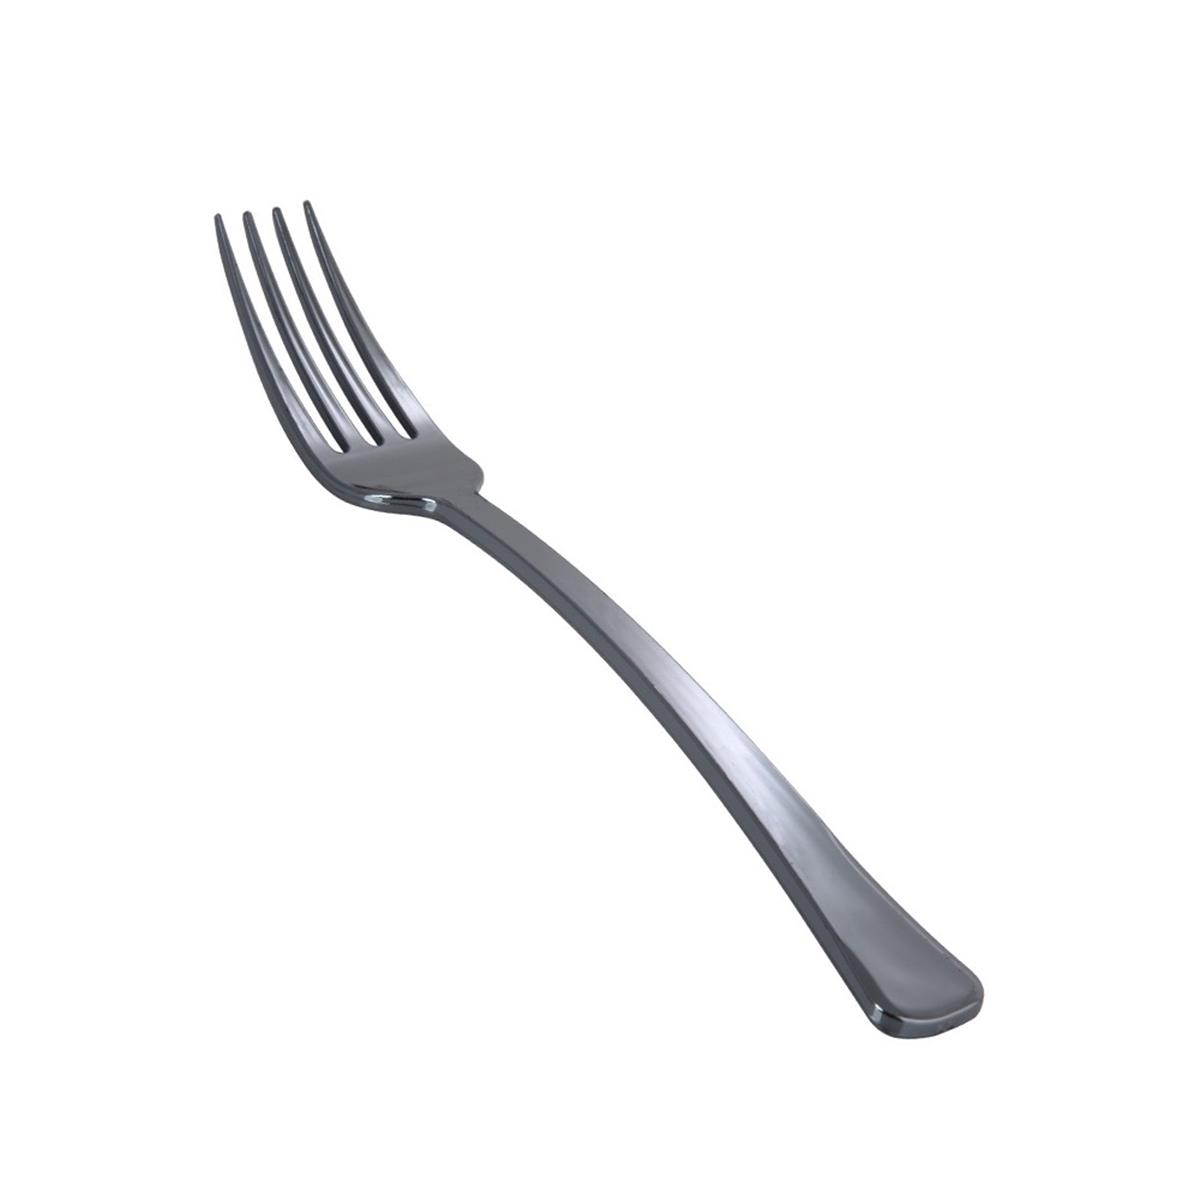 Emi-gwdf Pec Silver Glimmerware Dinner Fork